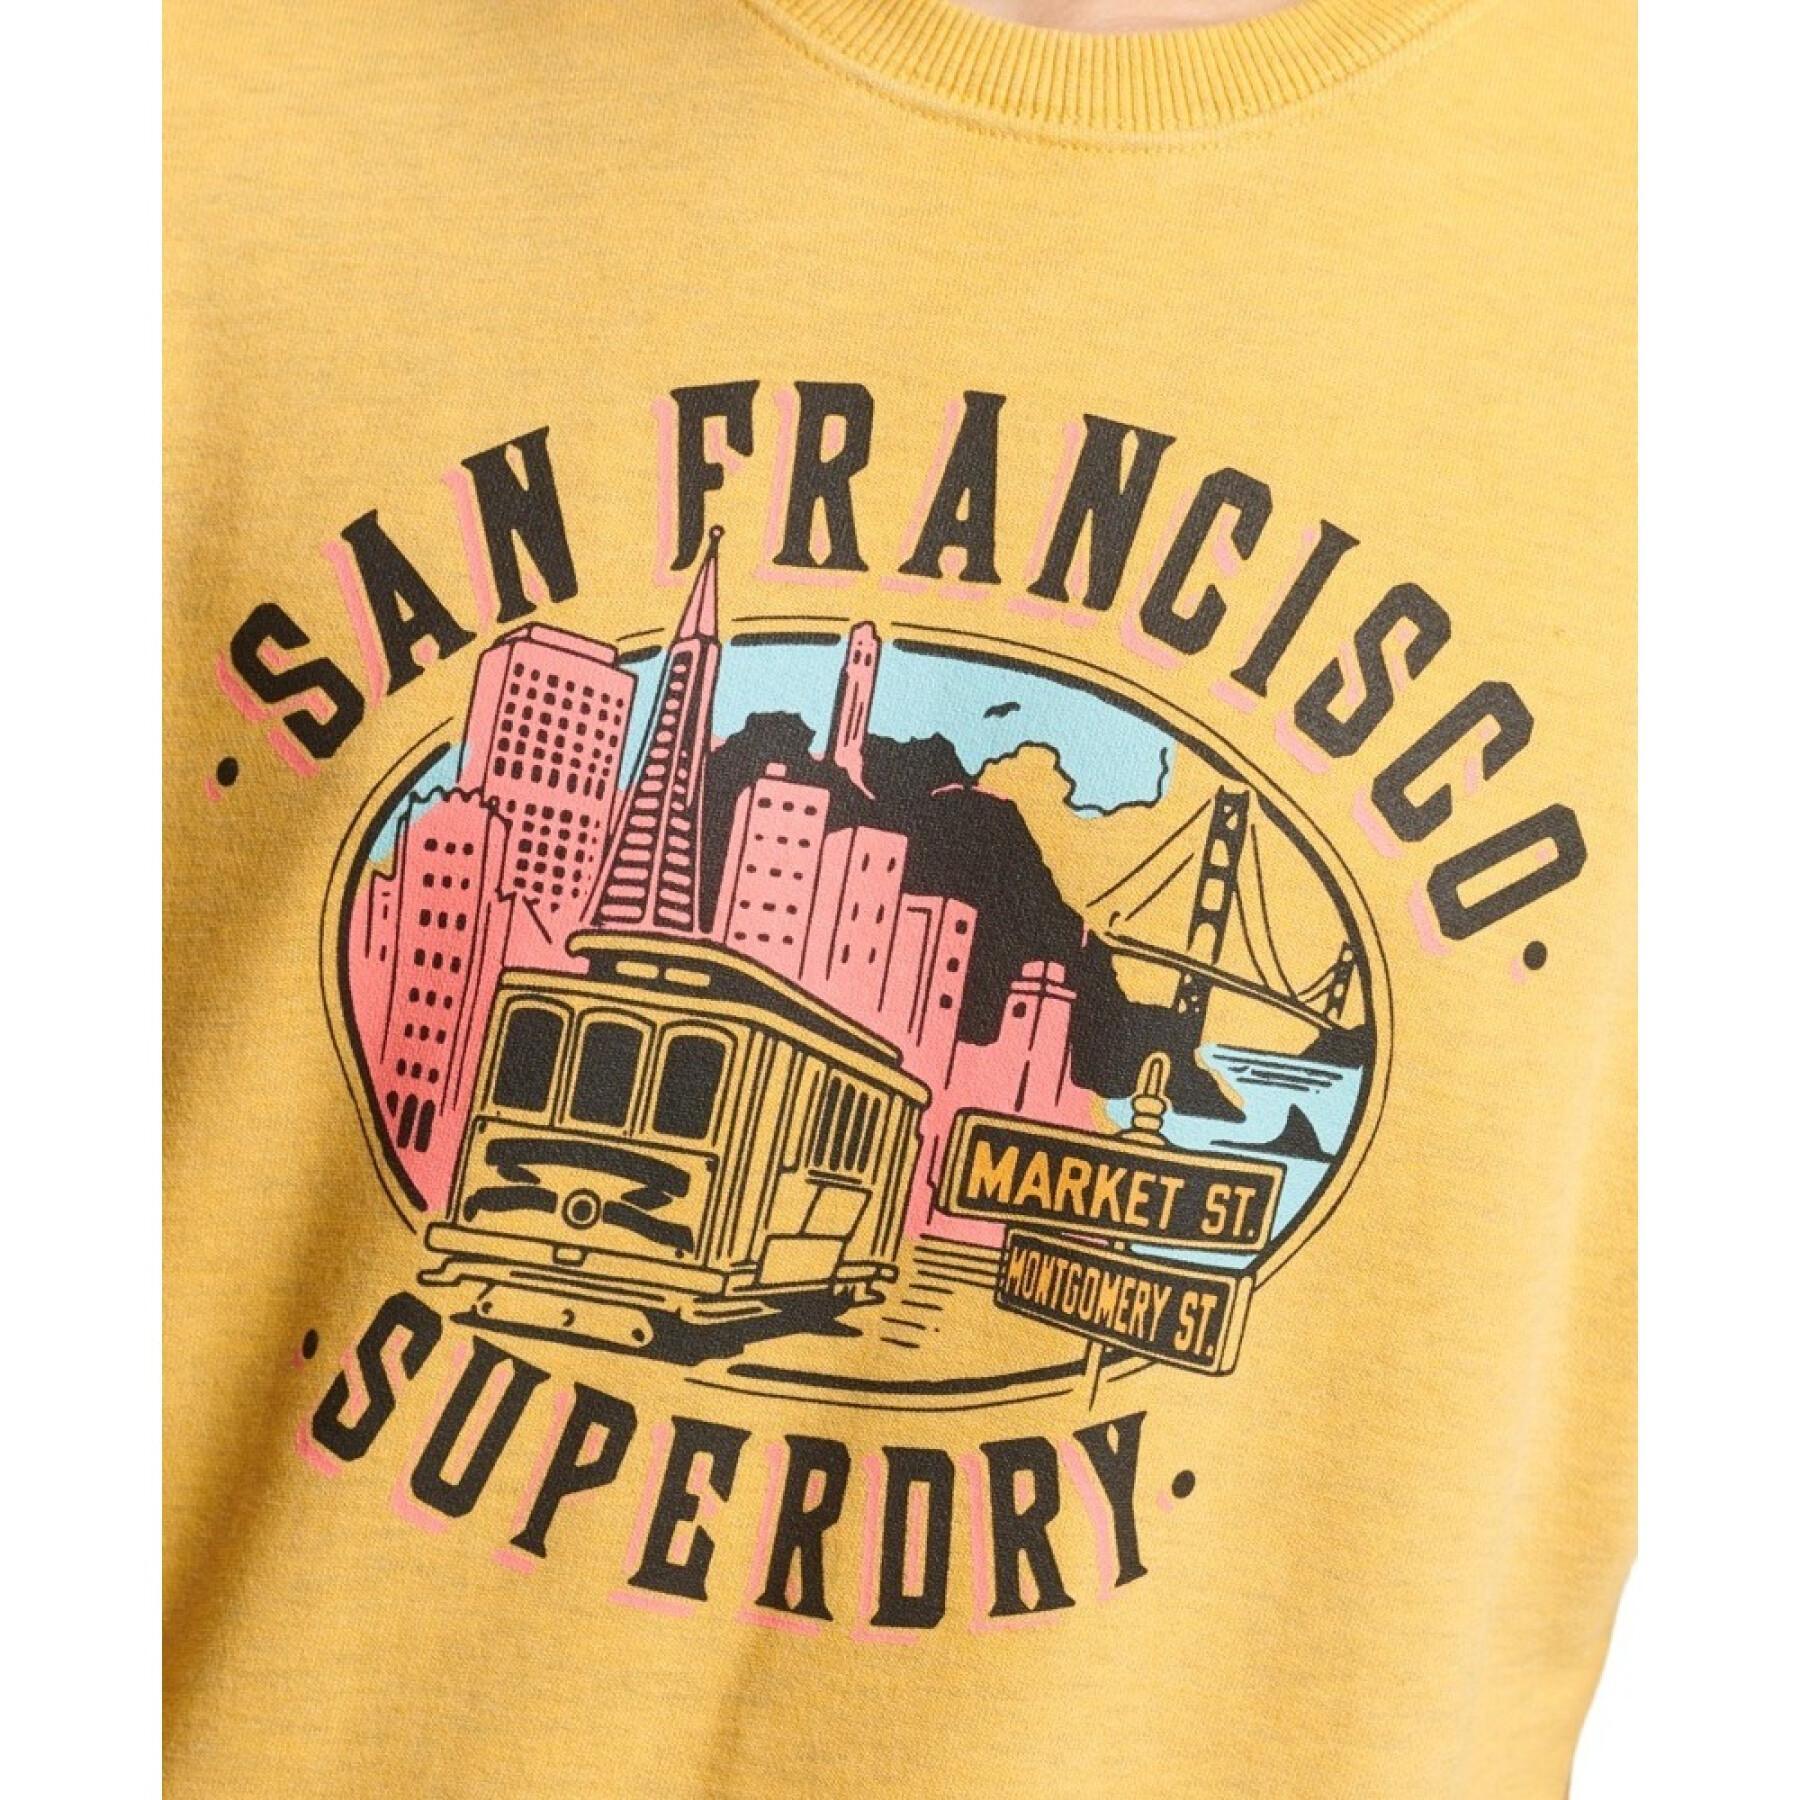 Sweatshirt choker Superdry City Souvenir